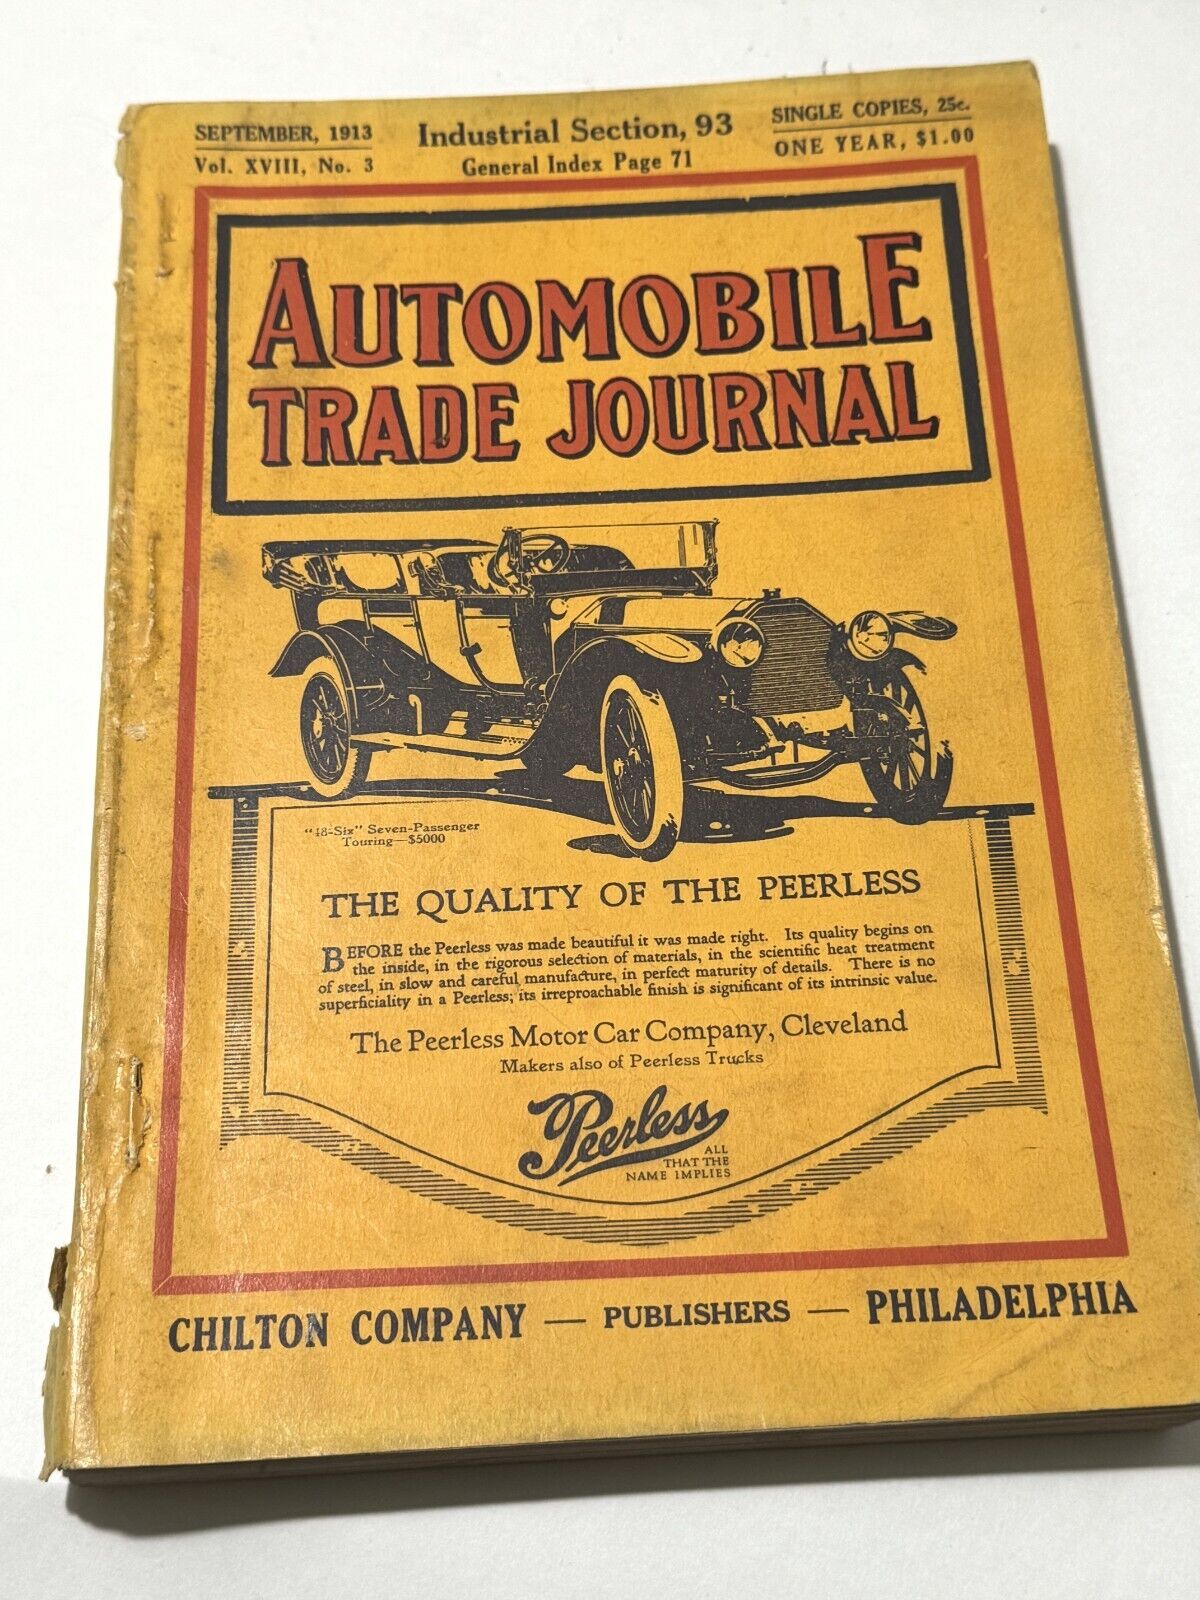 Antique AUTOMOBILE TRADE JOURNAL, Sept 1913 - Vol. XVIII  No. 3 - Chilton Co.